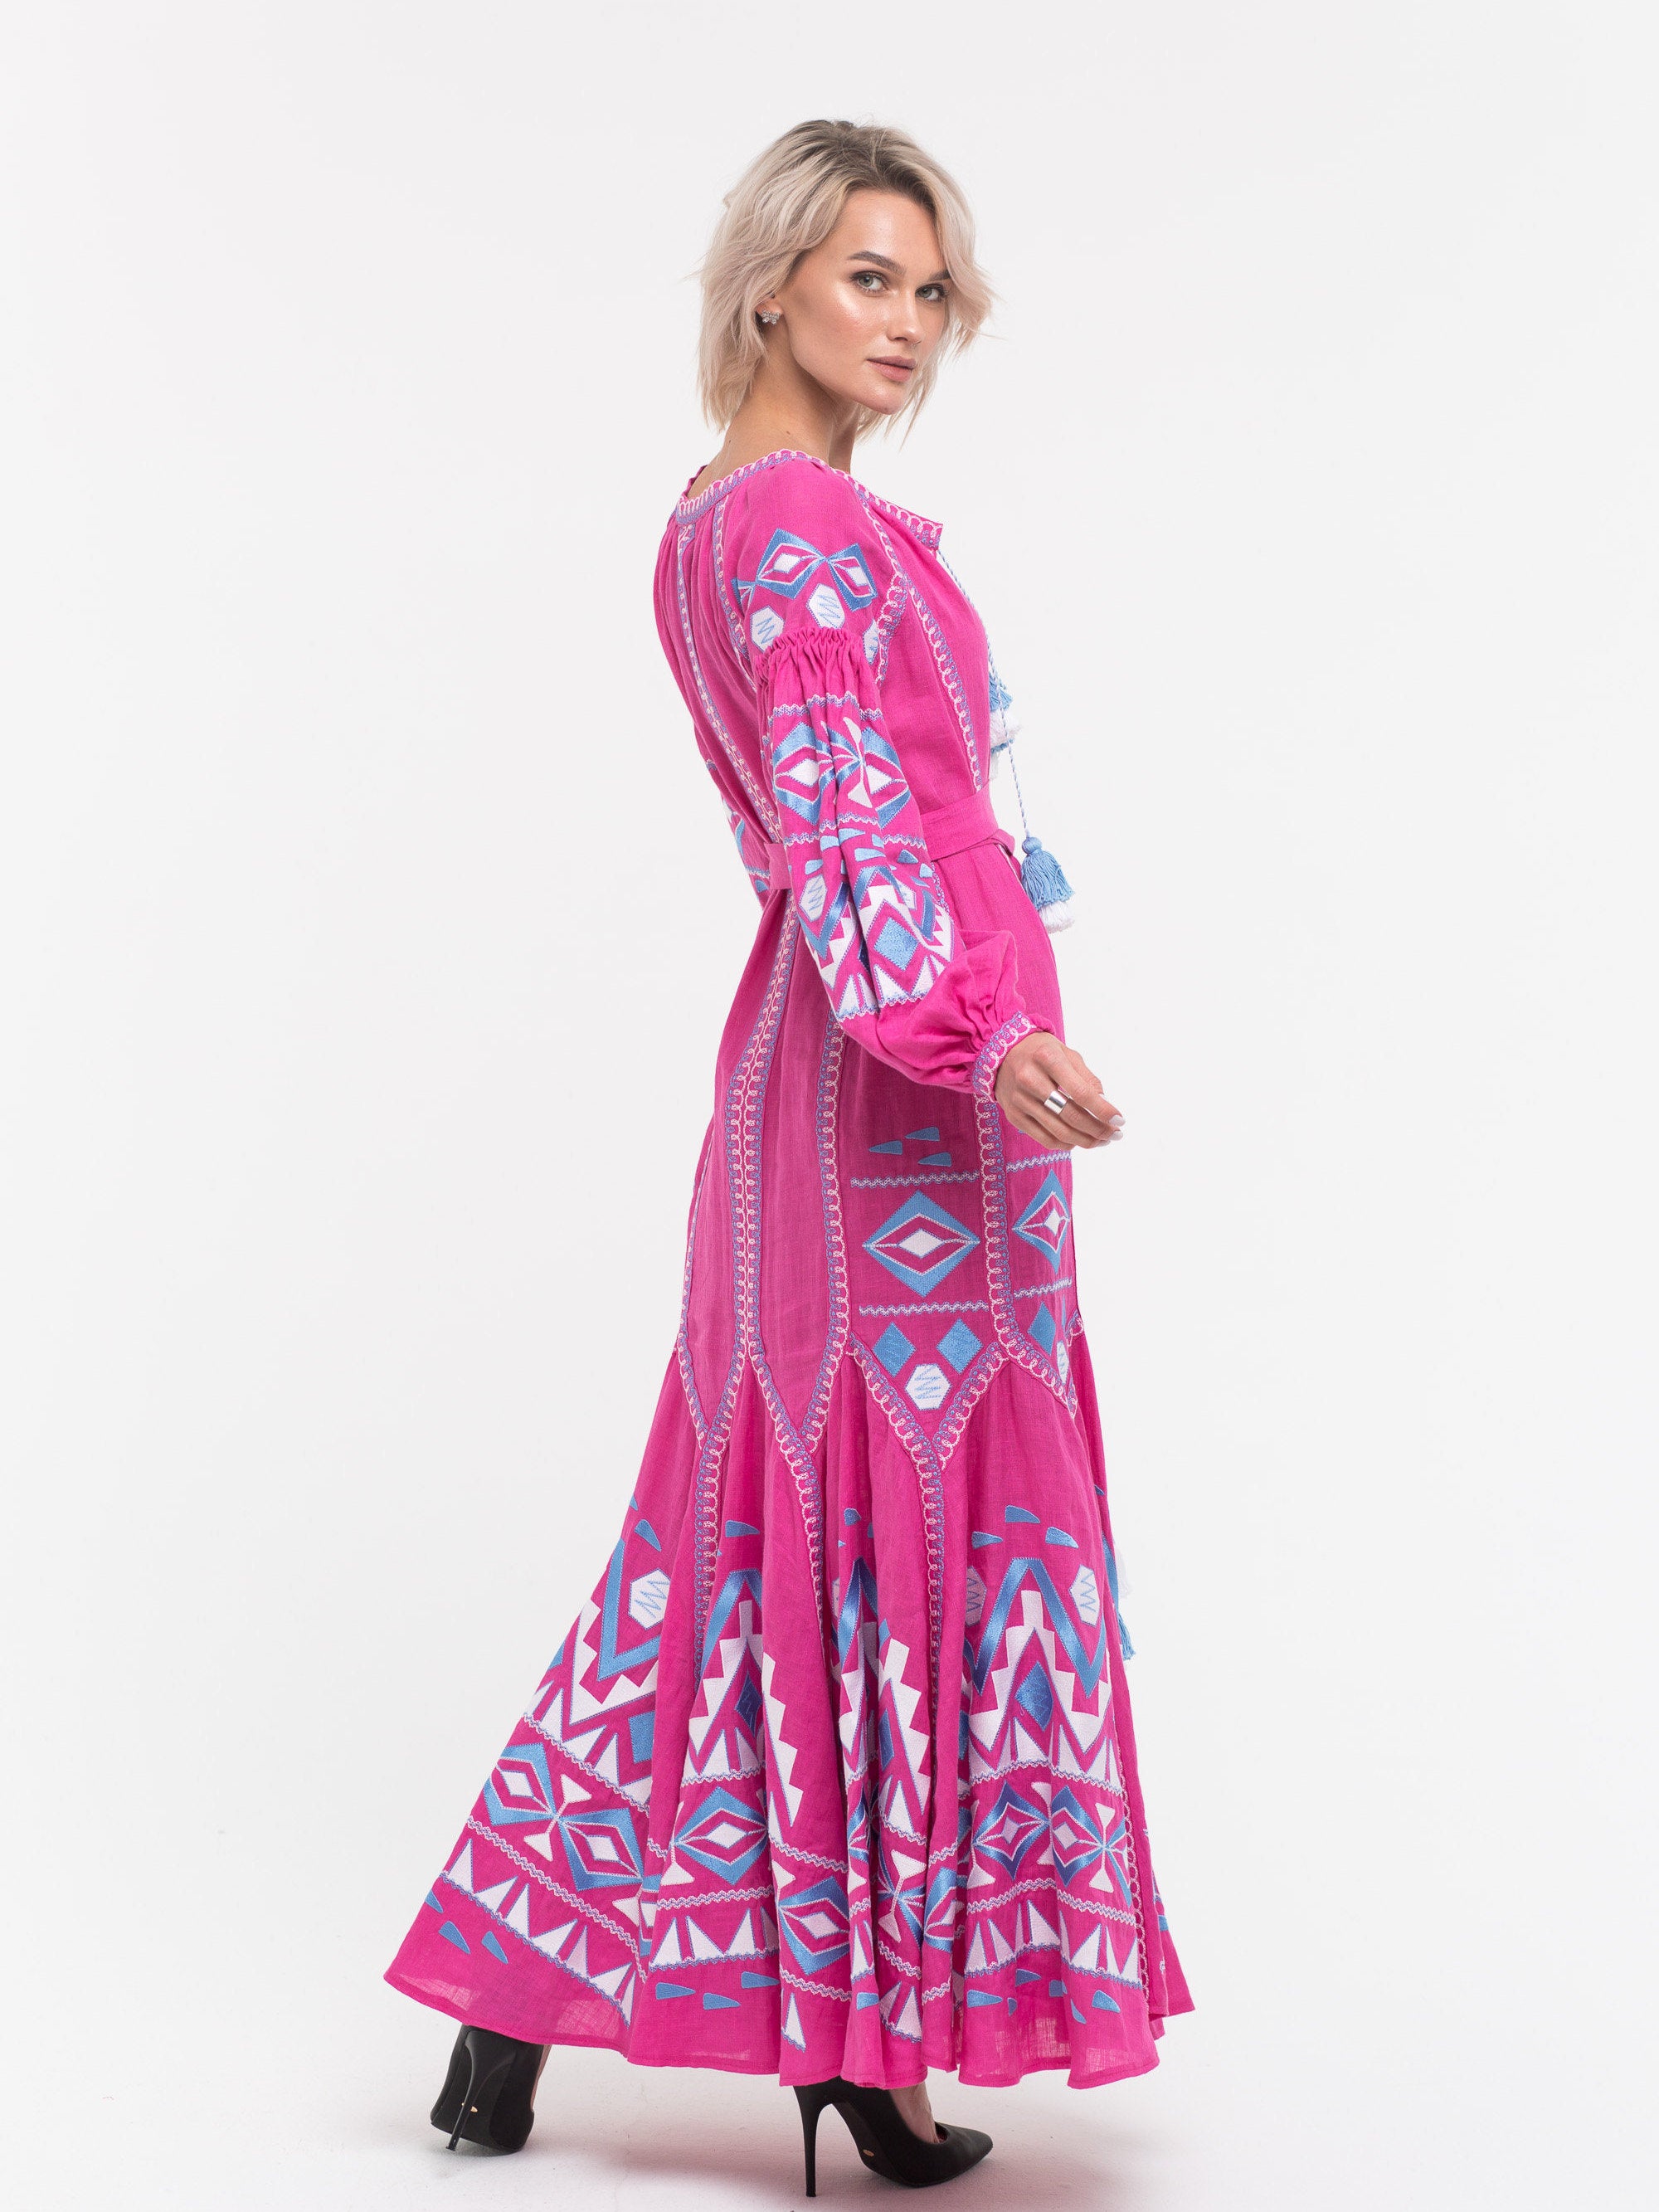 Embroidered wedding dress Ukrainian fashion gown